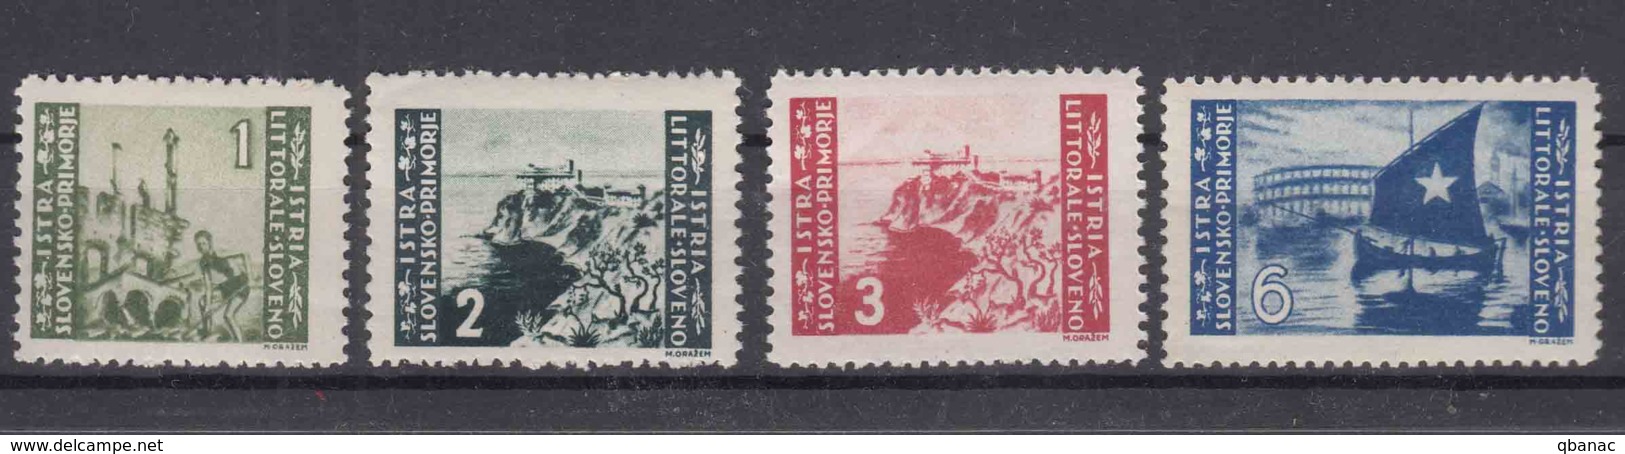 Istria Litorale Yugoslavia Occupation, 1946 Sassone#63-66 Complete Set, Mint Never Hinged - Occ. Yougoslave: Istria